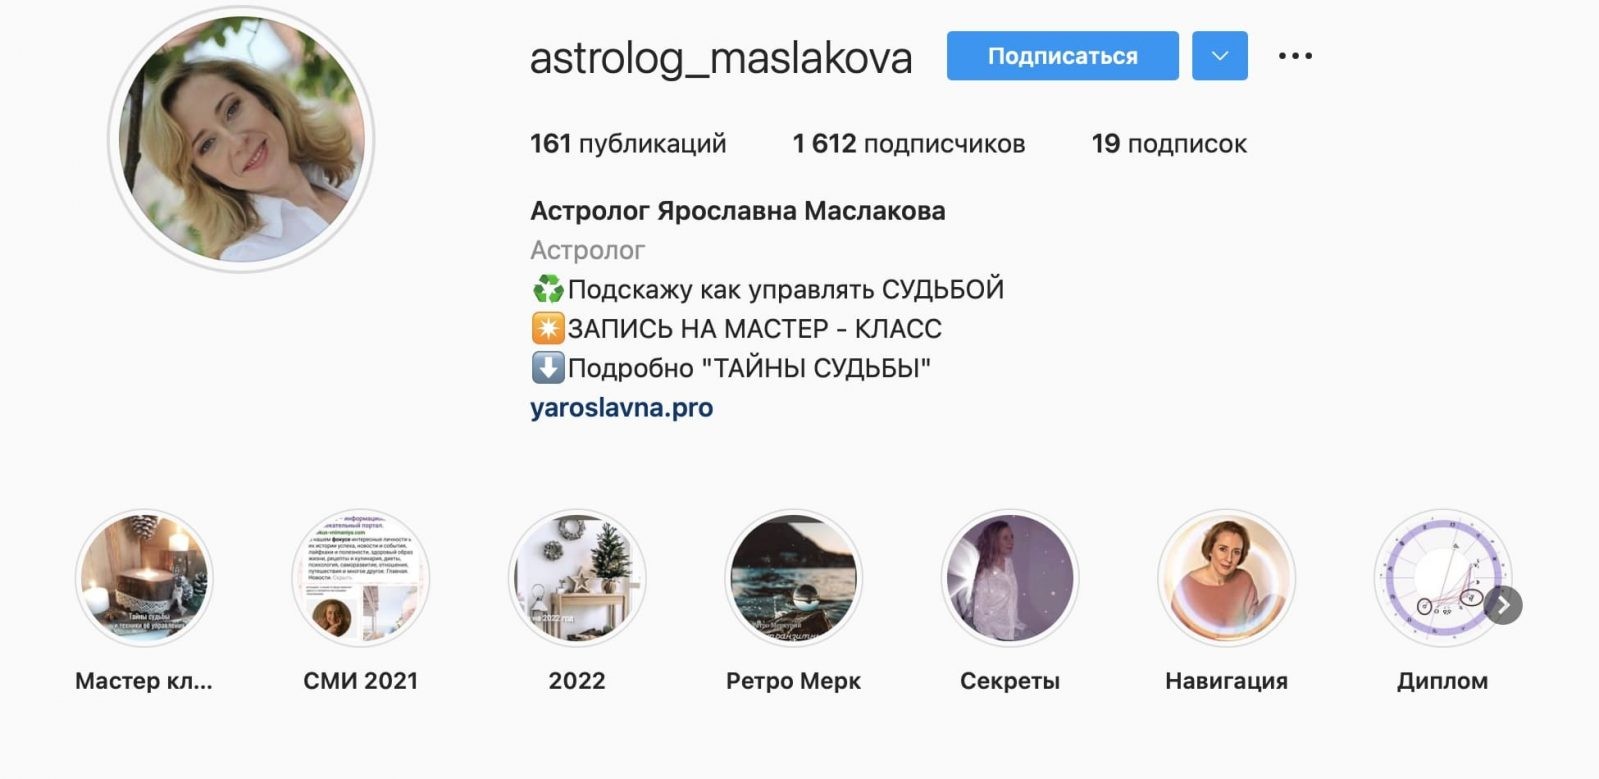 Астролог Ярославна - инстаграм